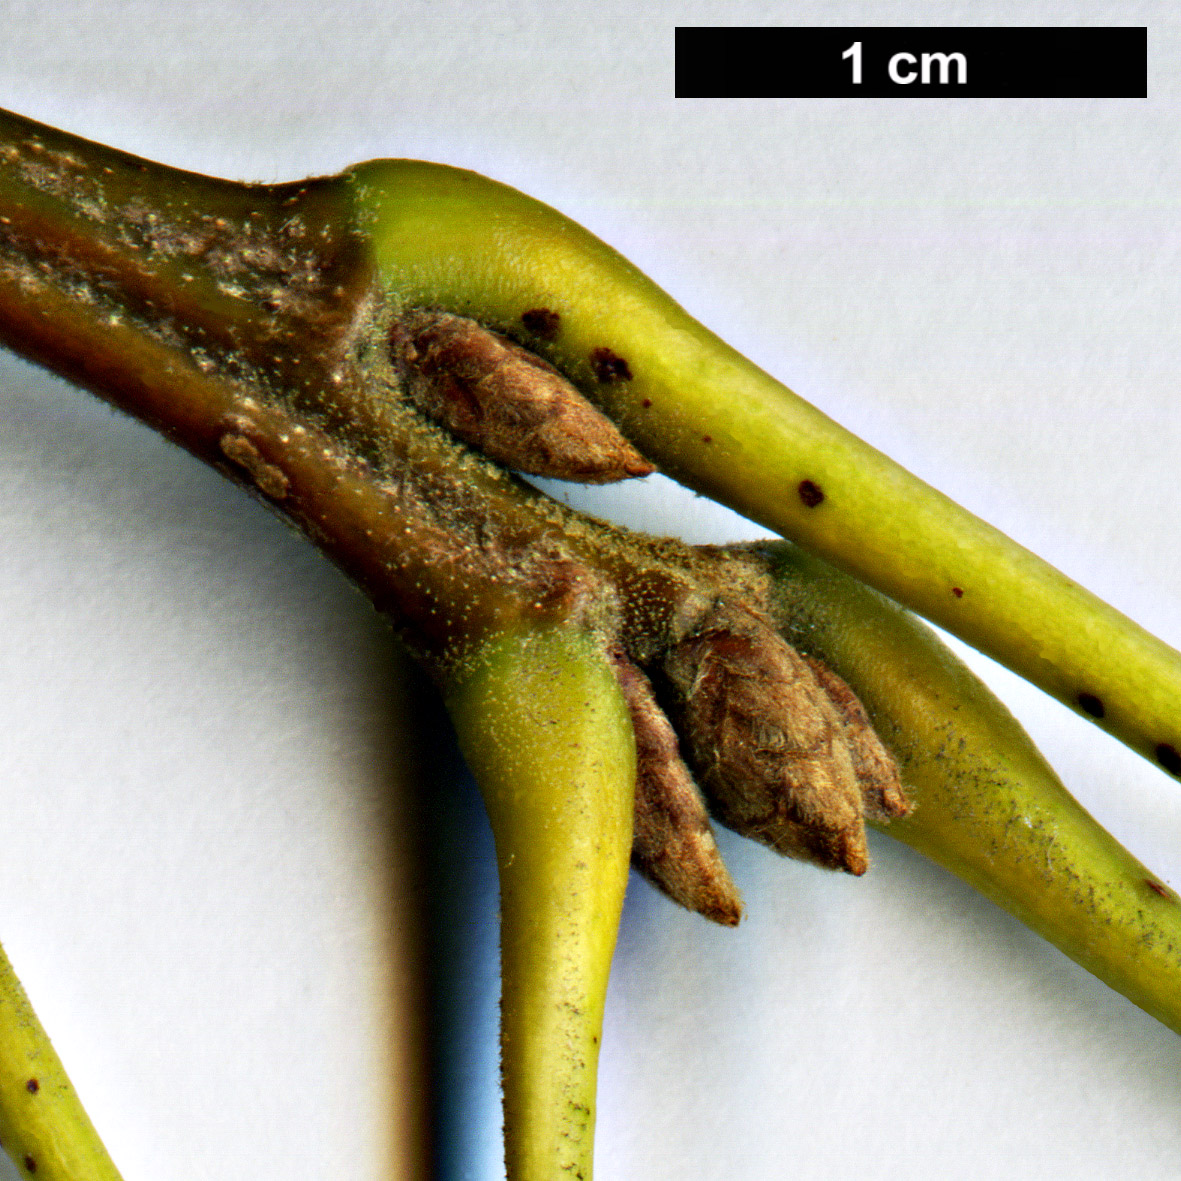 High resolution image: Family: Fagaceae - Genus: Quercus - Taxon: velutina